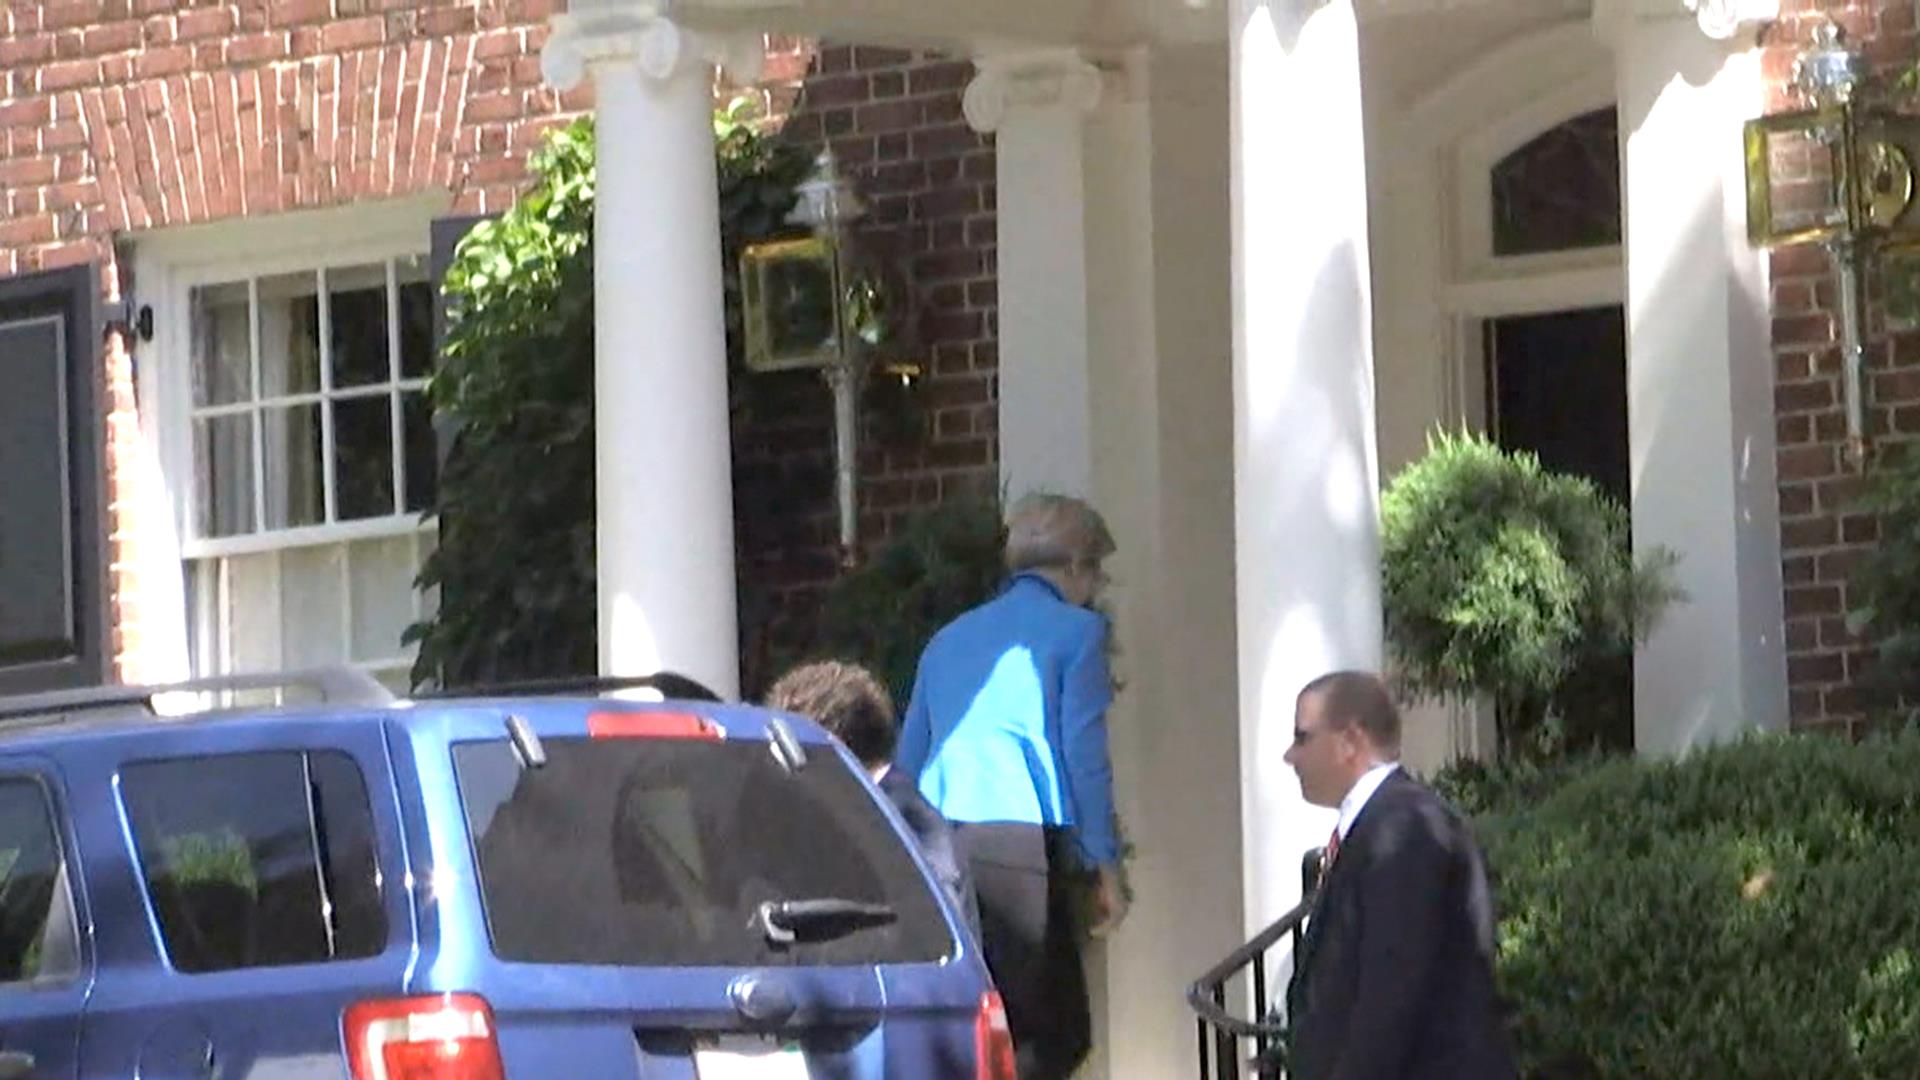 Elizabeth Warren Arrives at Clinton's House for Meeting - NBC News